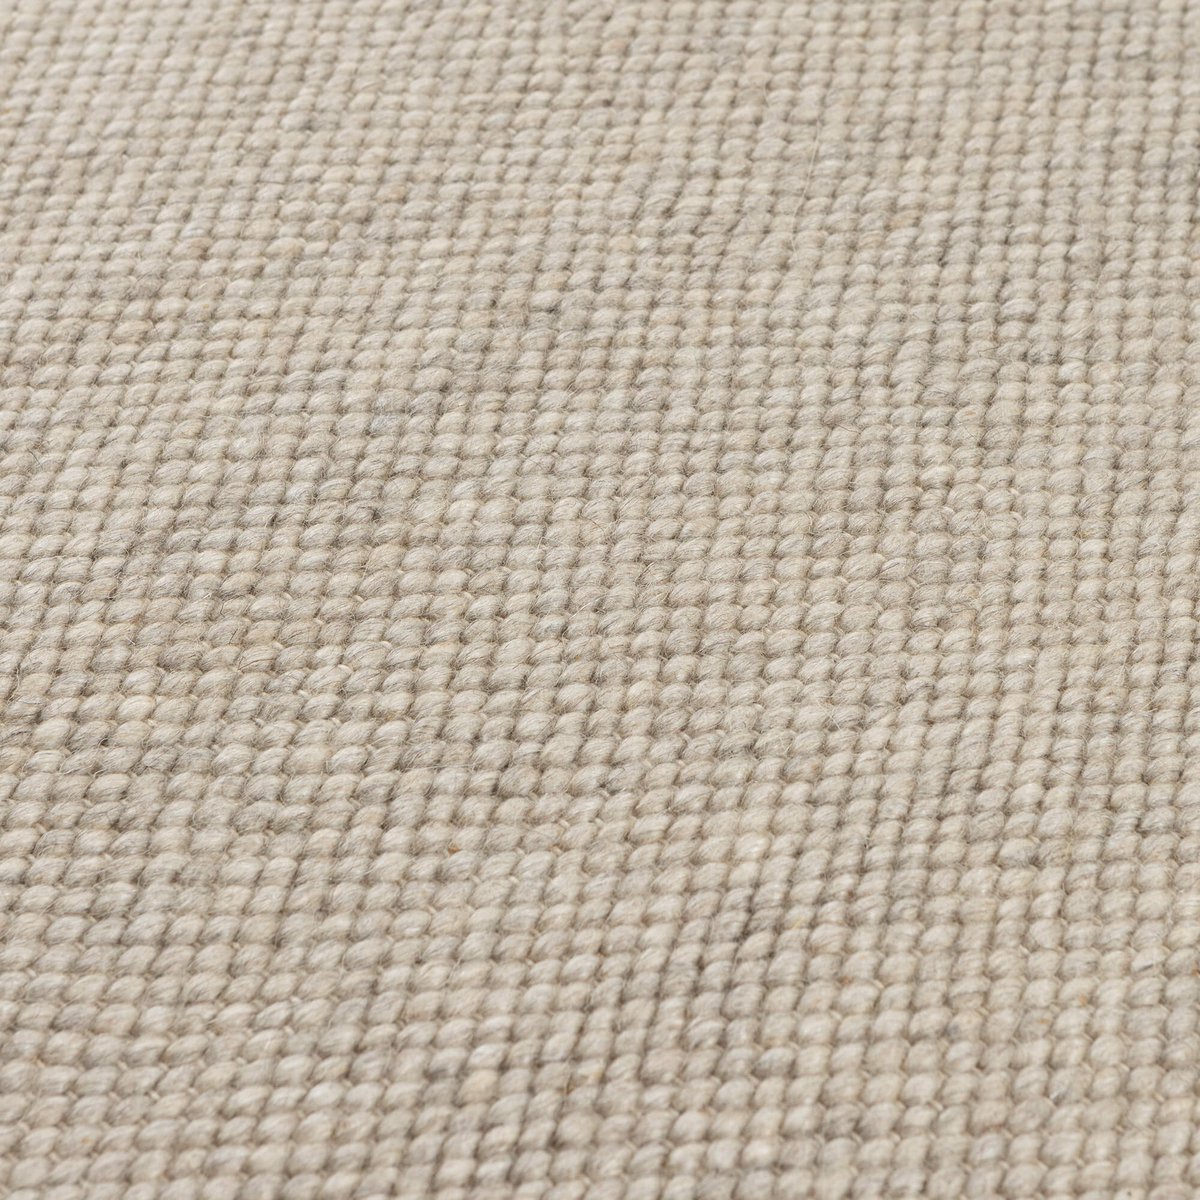 wool rug light gray 160x230cm